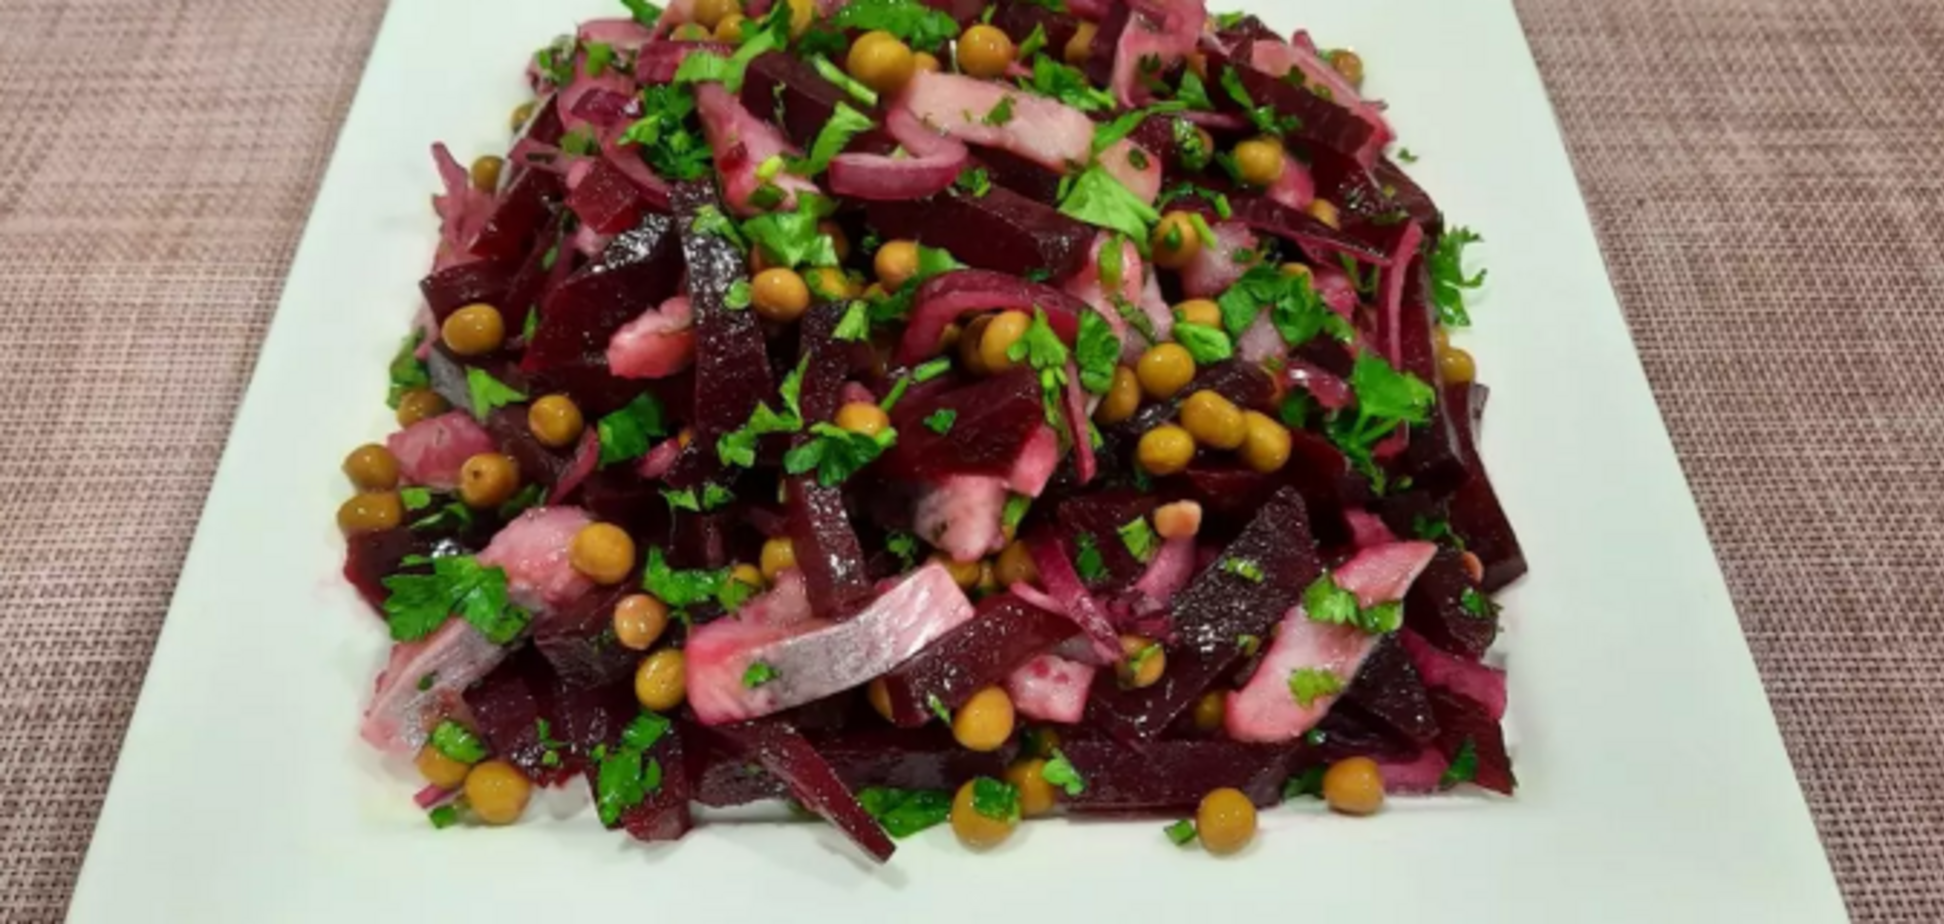 Смачніше, ніж 'Шуба': бюджетний салат із оселедця за рецептом Ектора Хіменеса-Браво